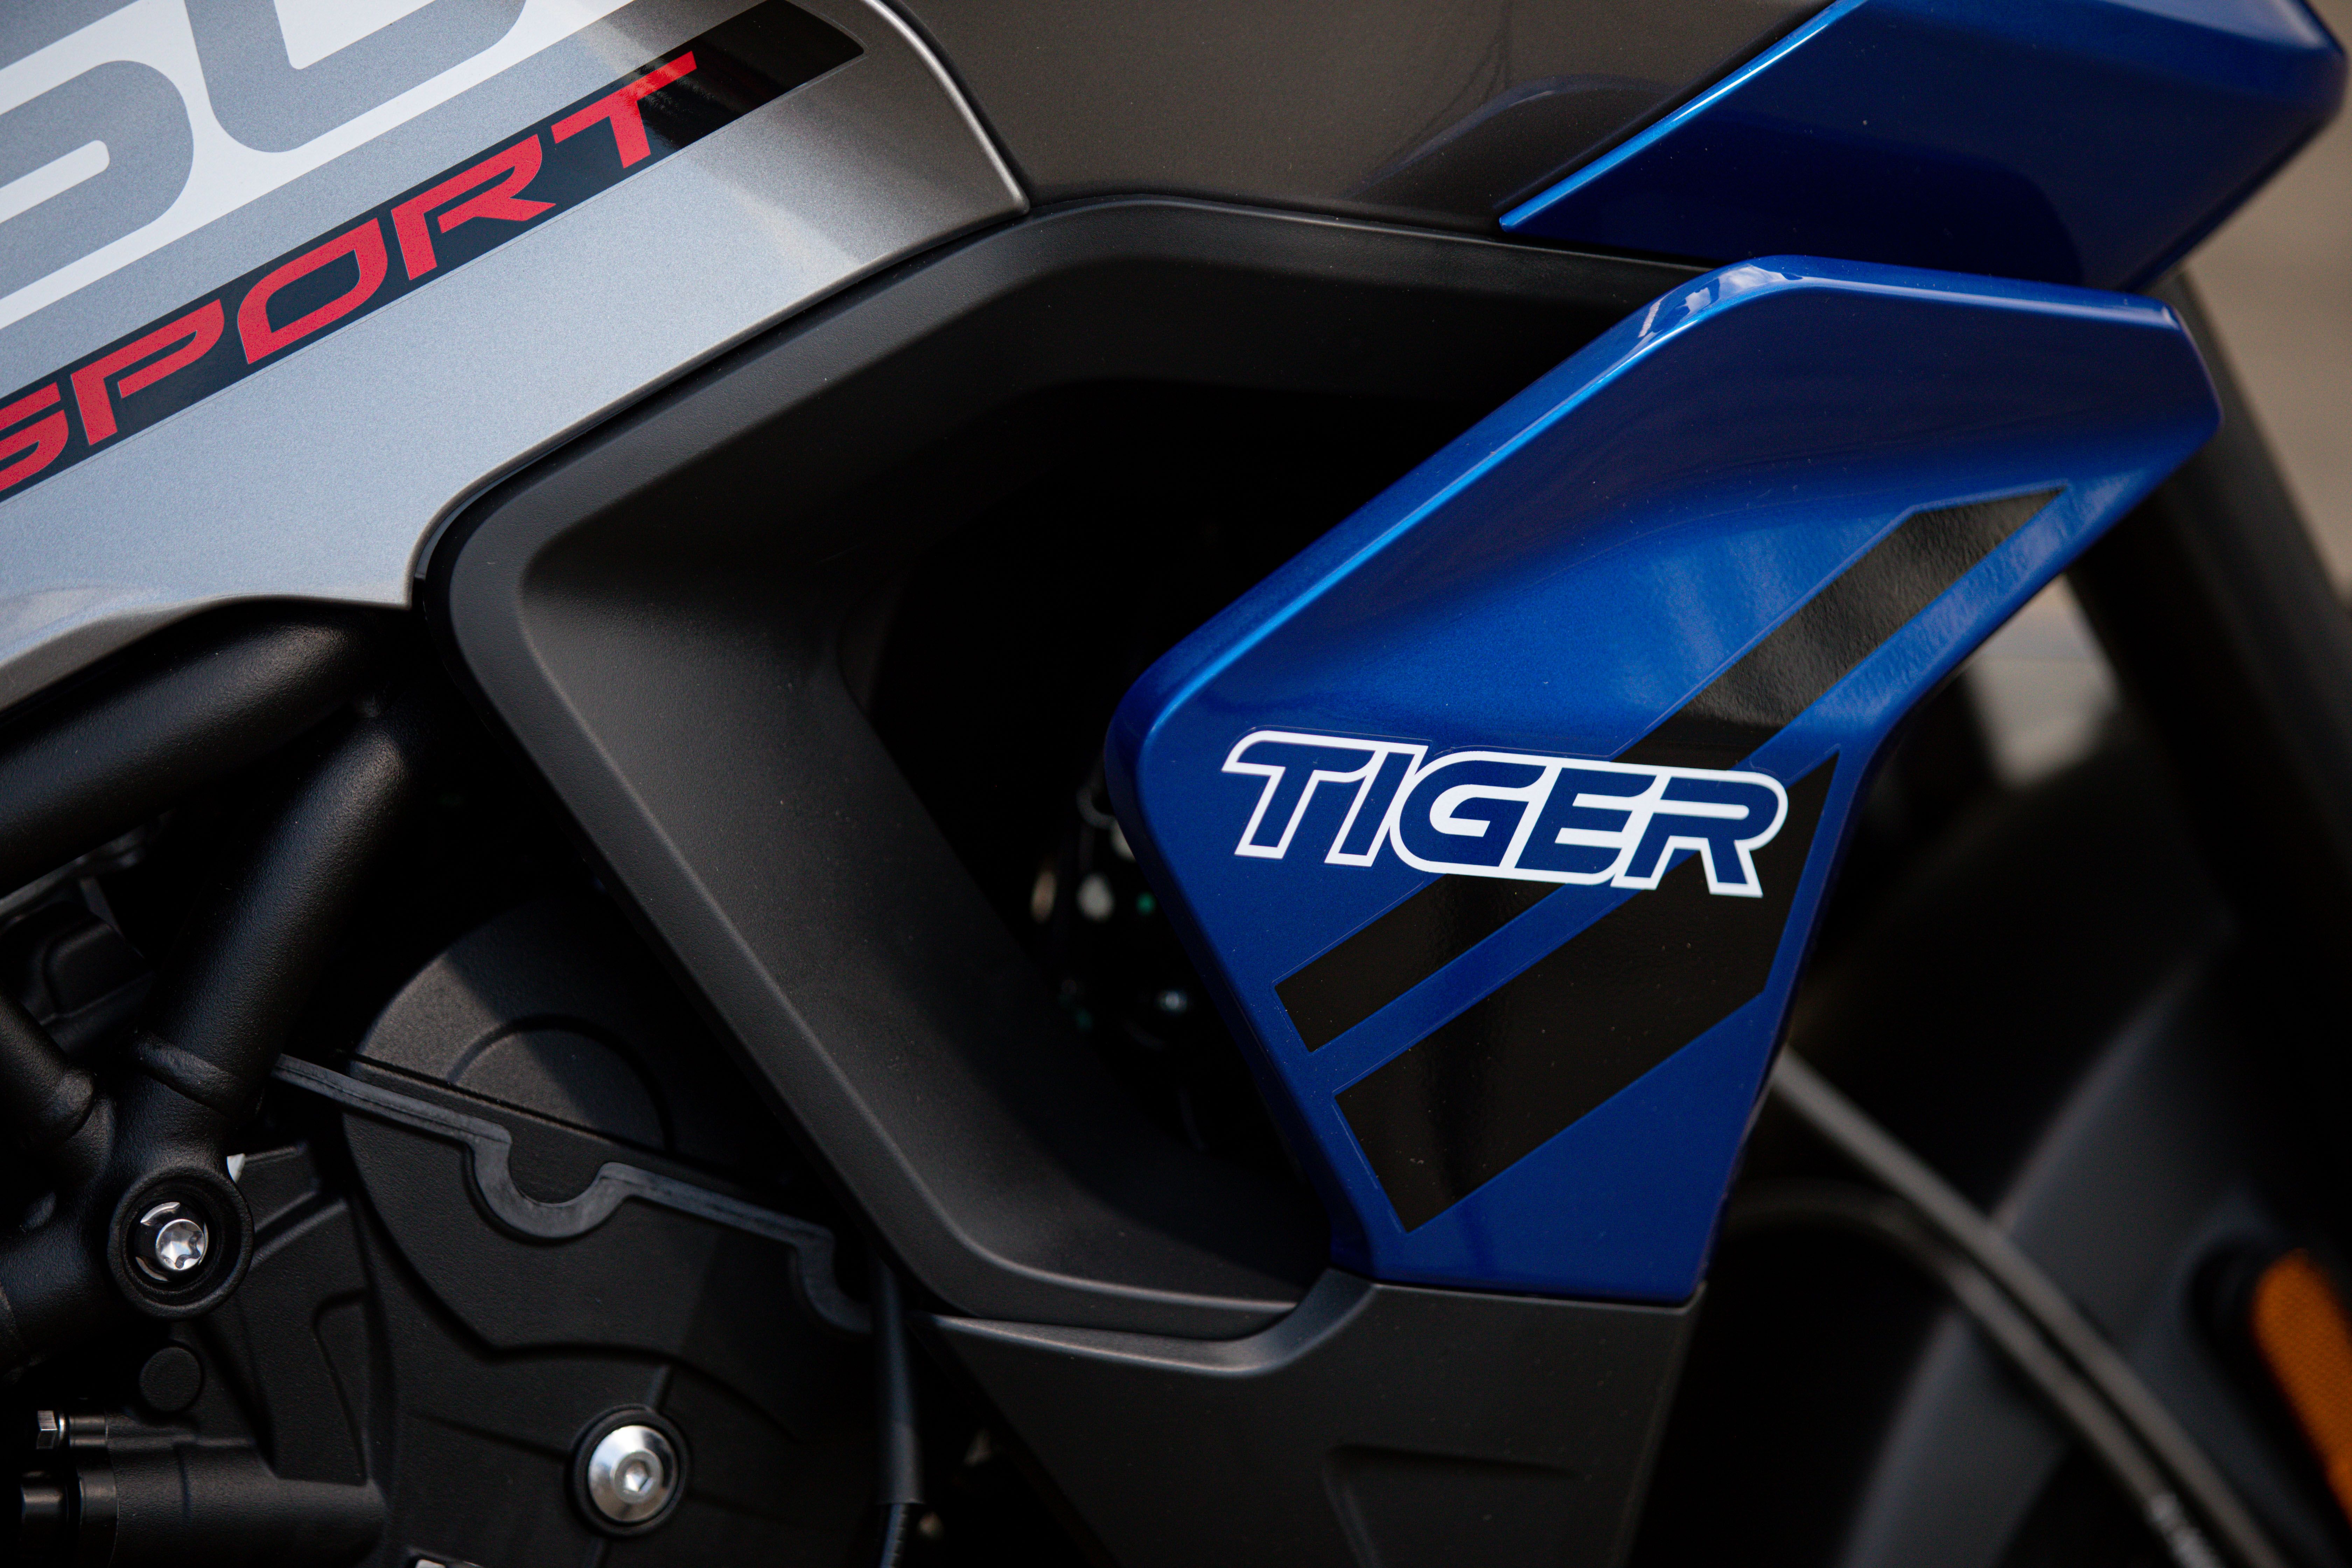 2021 - 2022 Triumph Tiger 850 Sport